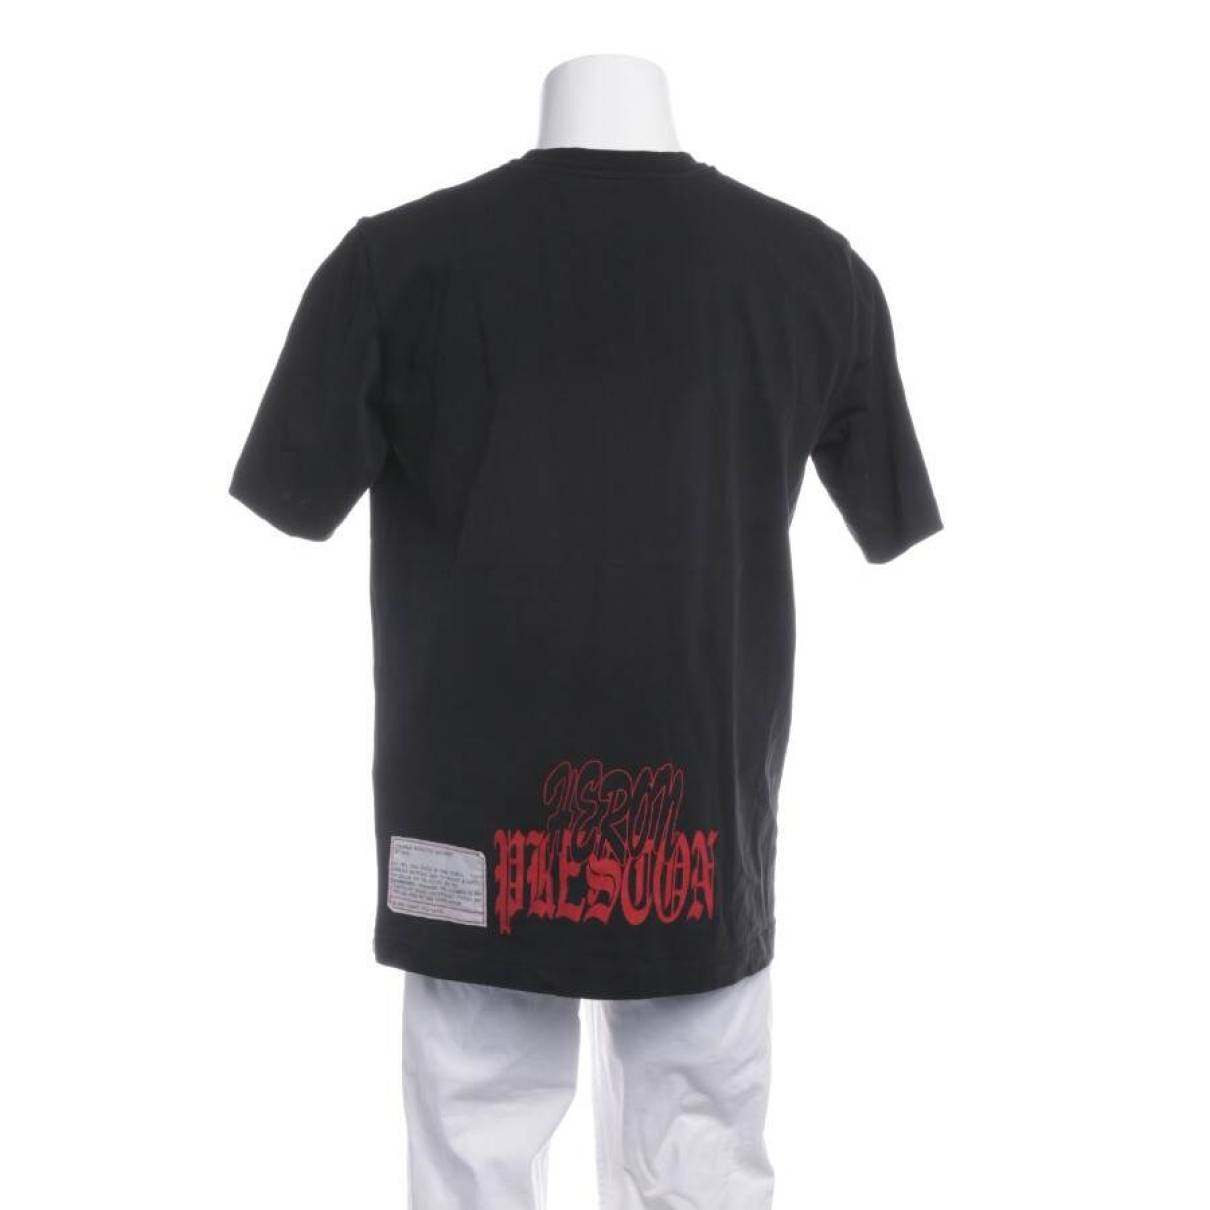 Buy Heron Preston T-shirt online